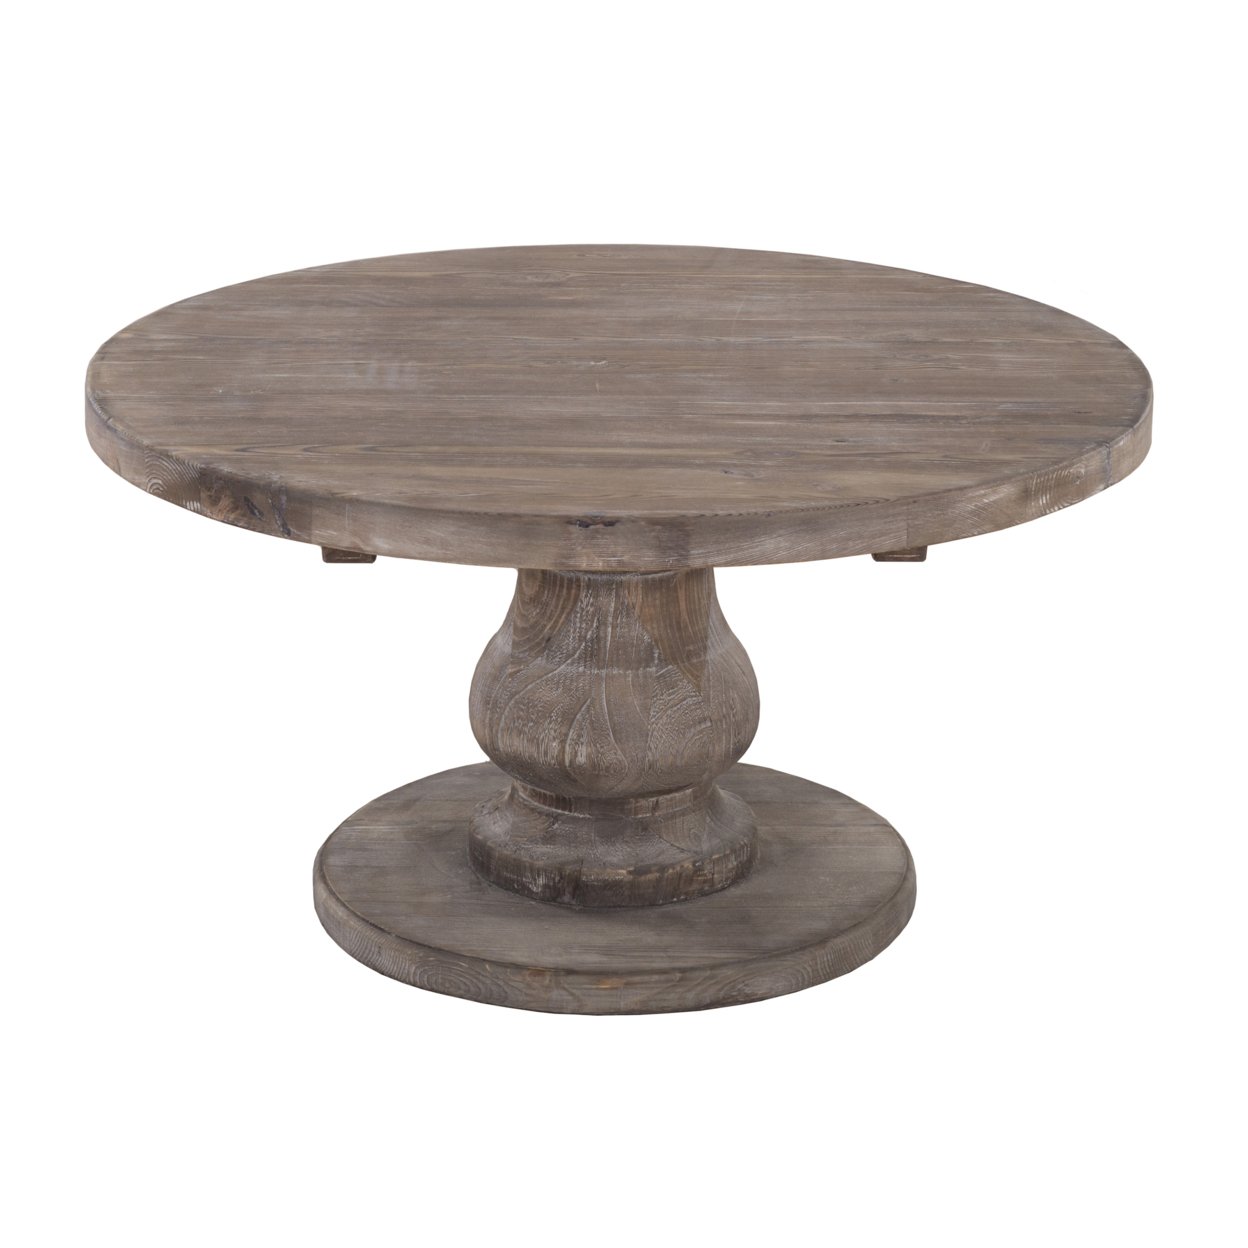 Wooden Round Coffee Table With Pedestal Base, Brown- Saltoro Sherpi